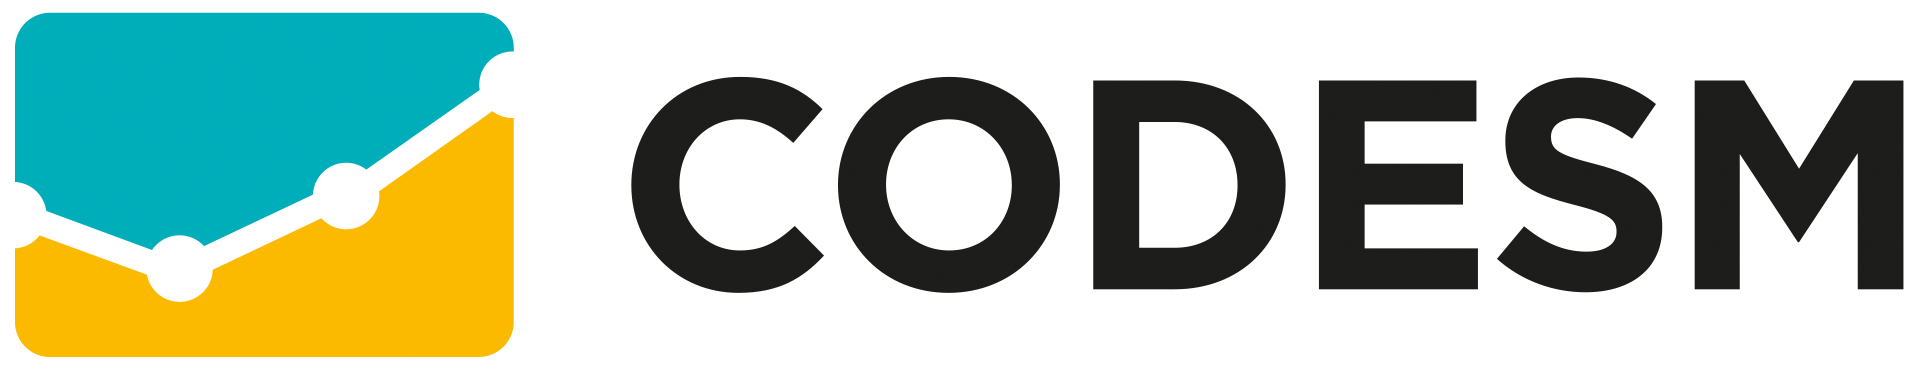 CODESM logo